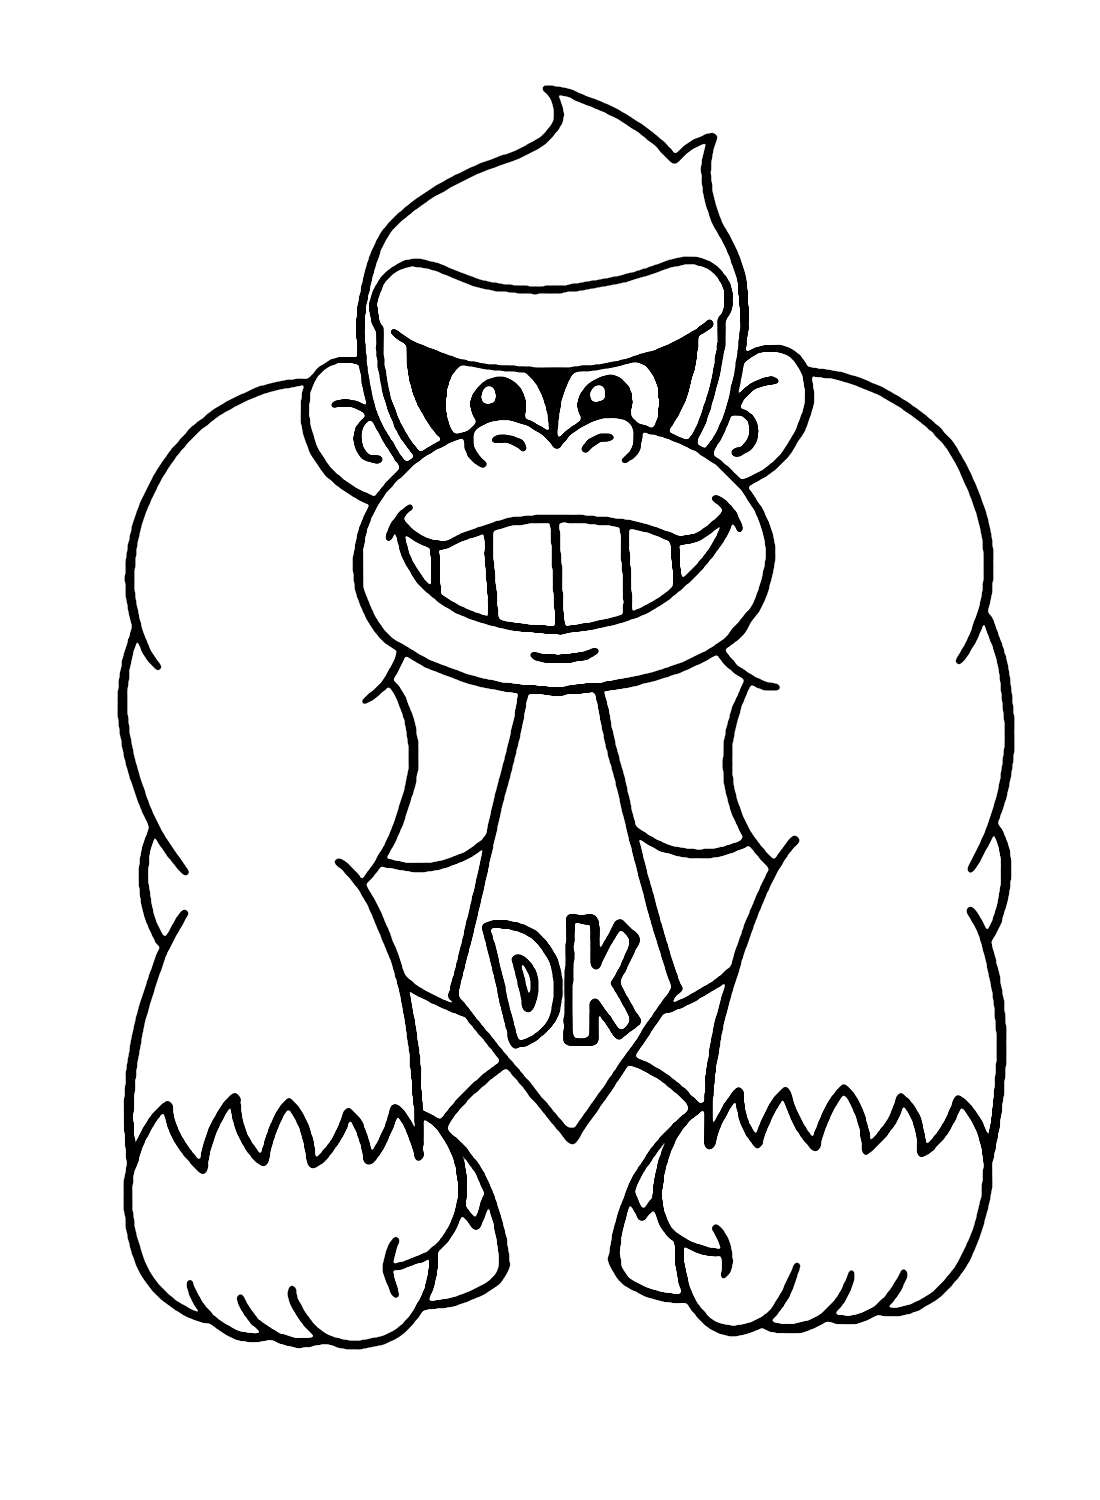 Il simpatico Donkey Kong di Donkey Kong